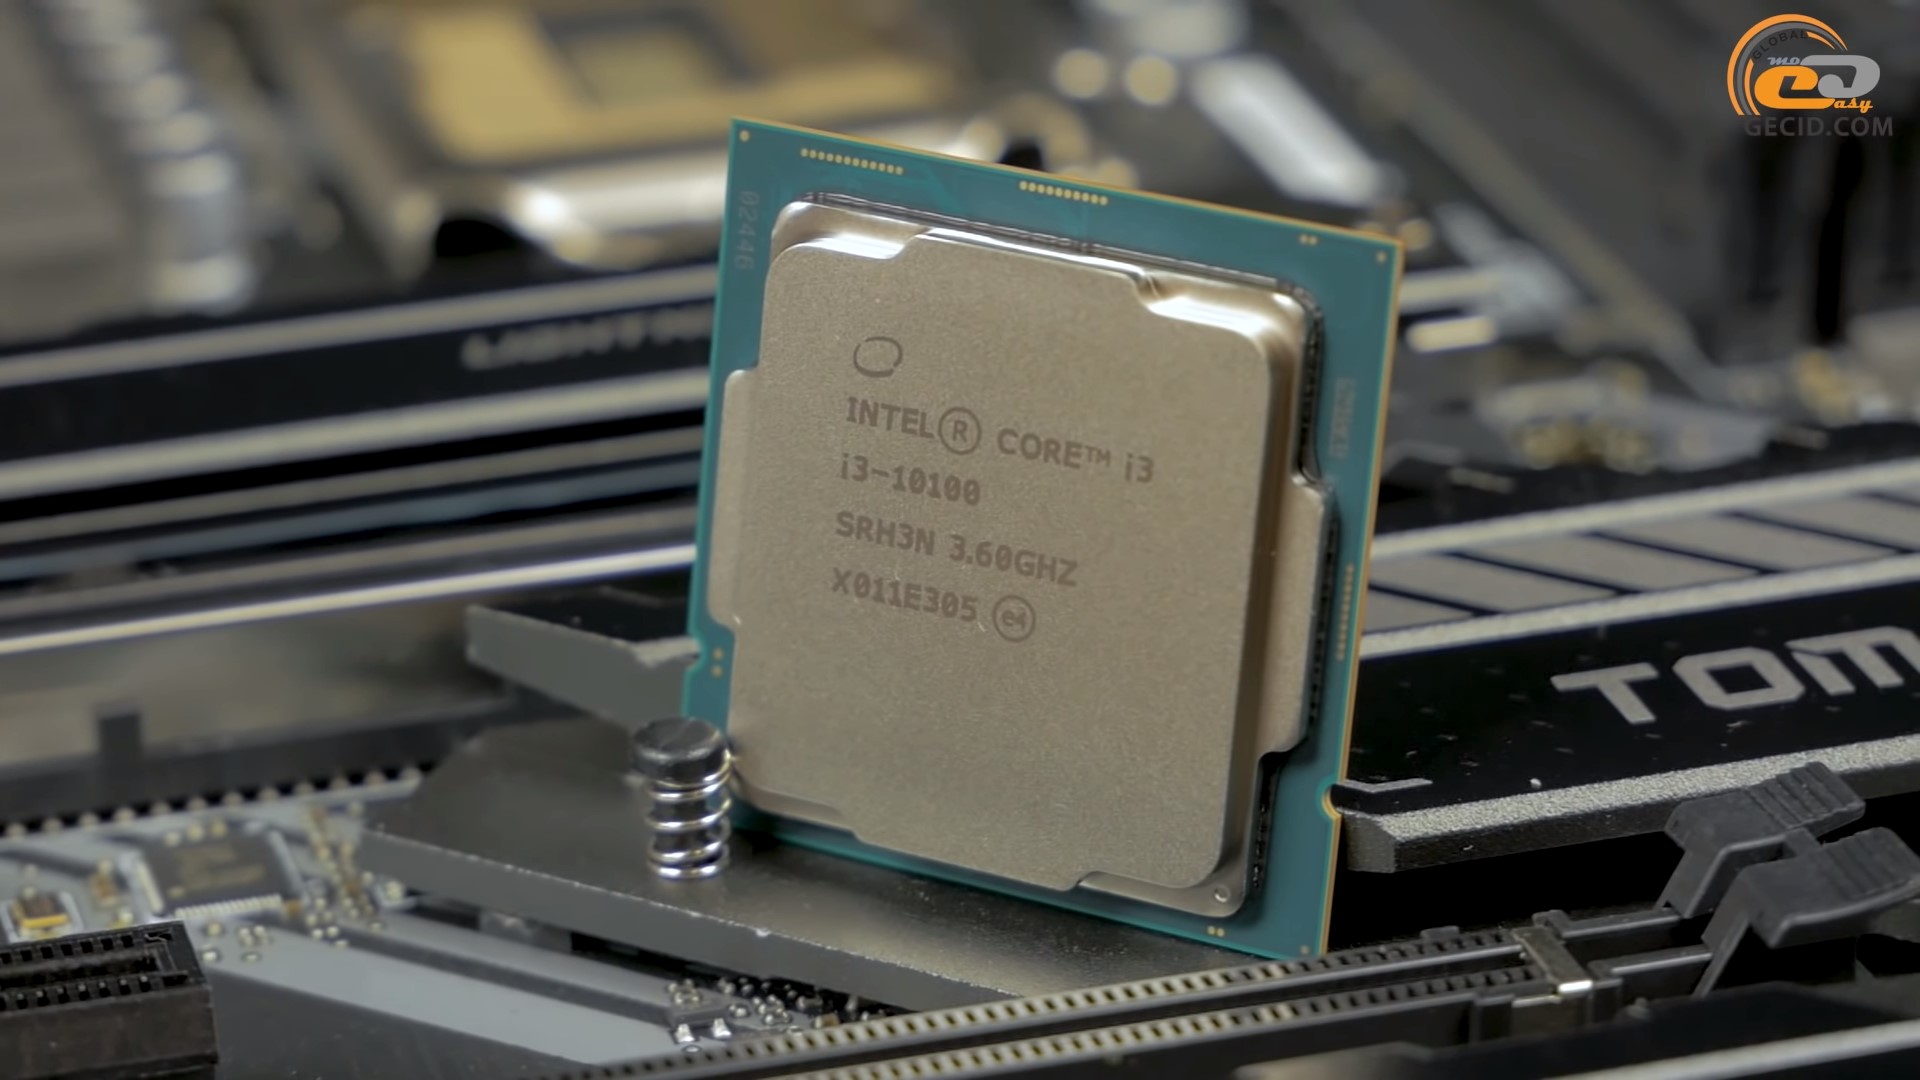 Тест Intel Core i5-10400 с DDR4-2666 и DDR4-3200: интересно «камни